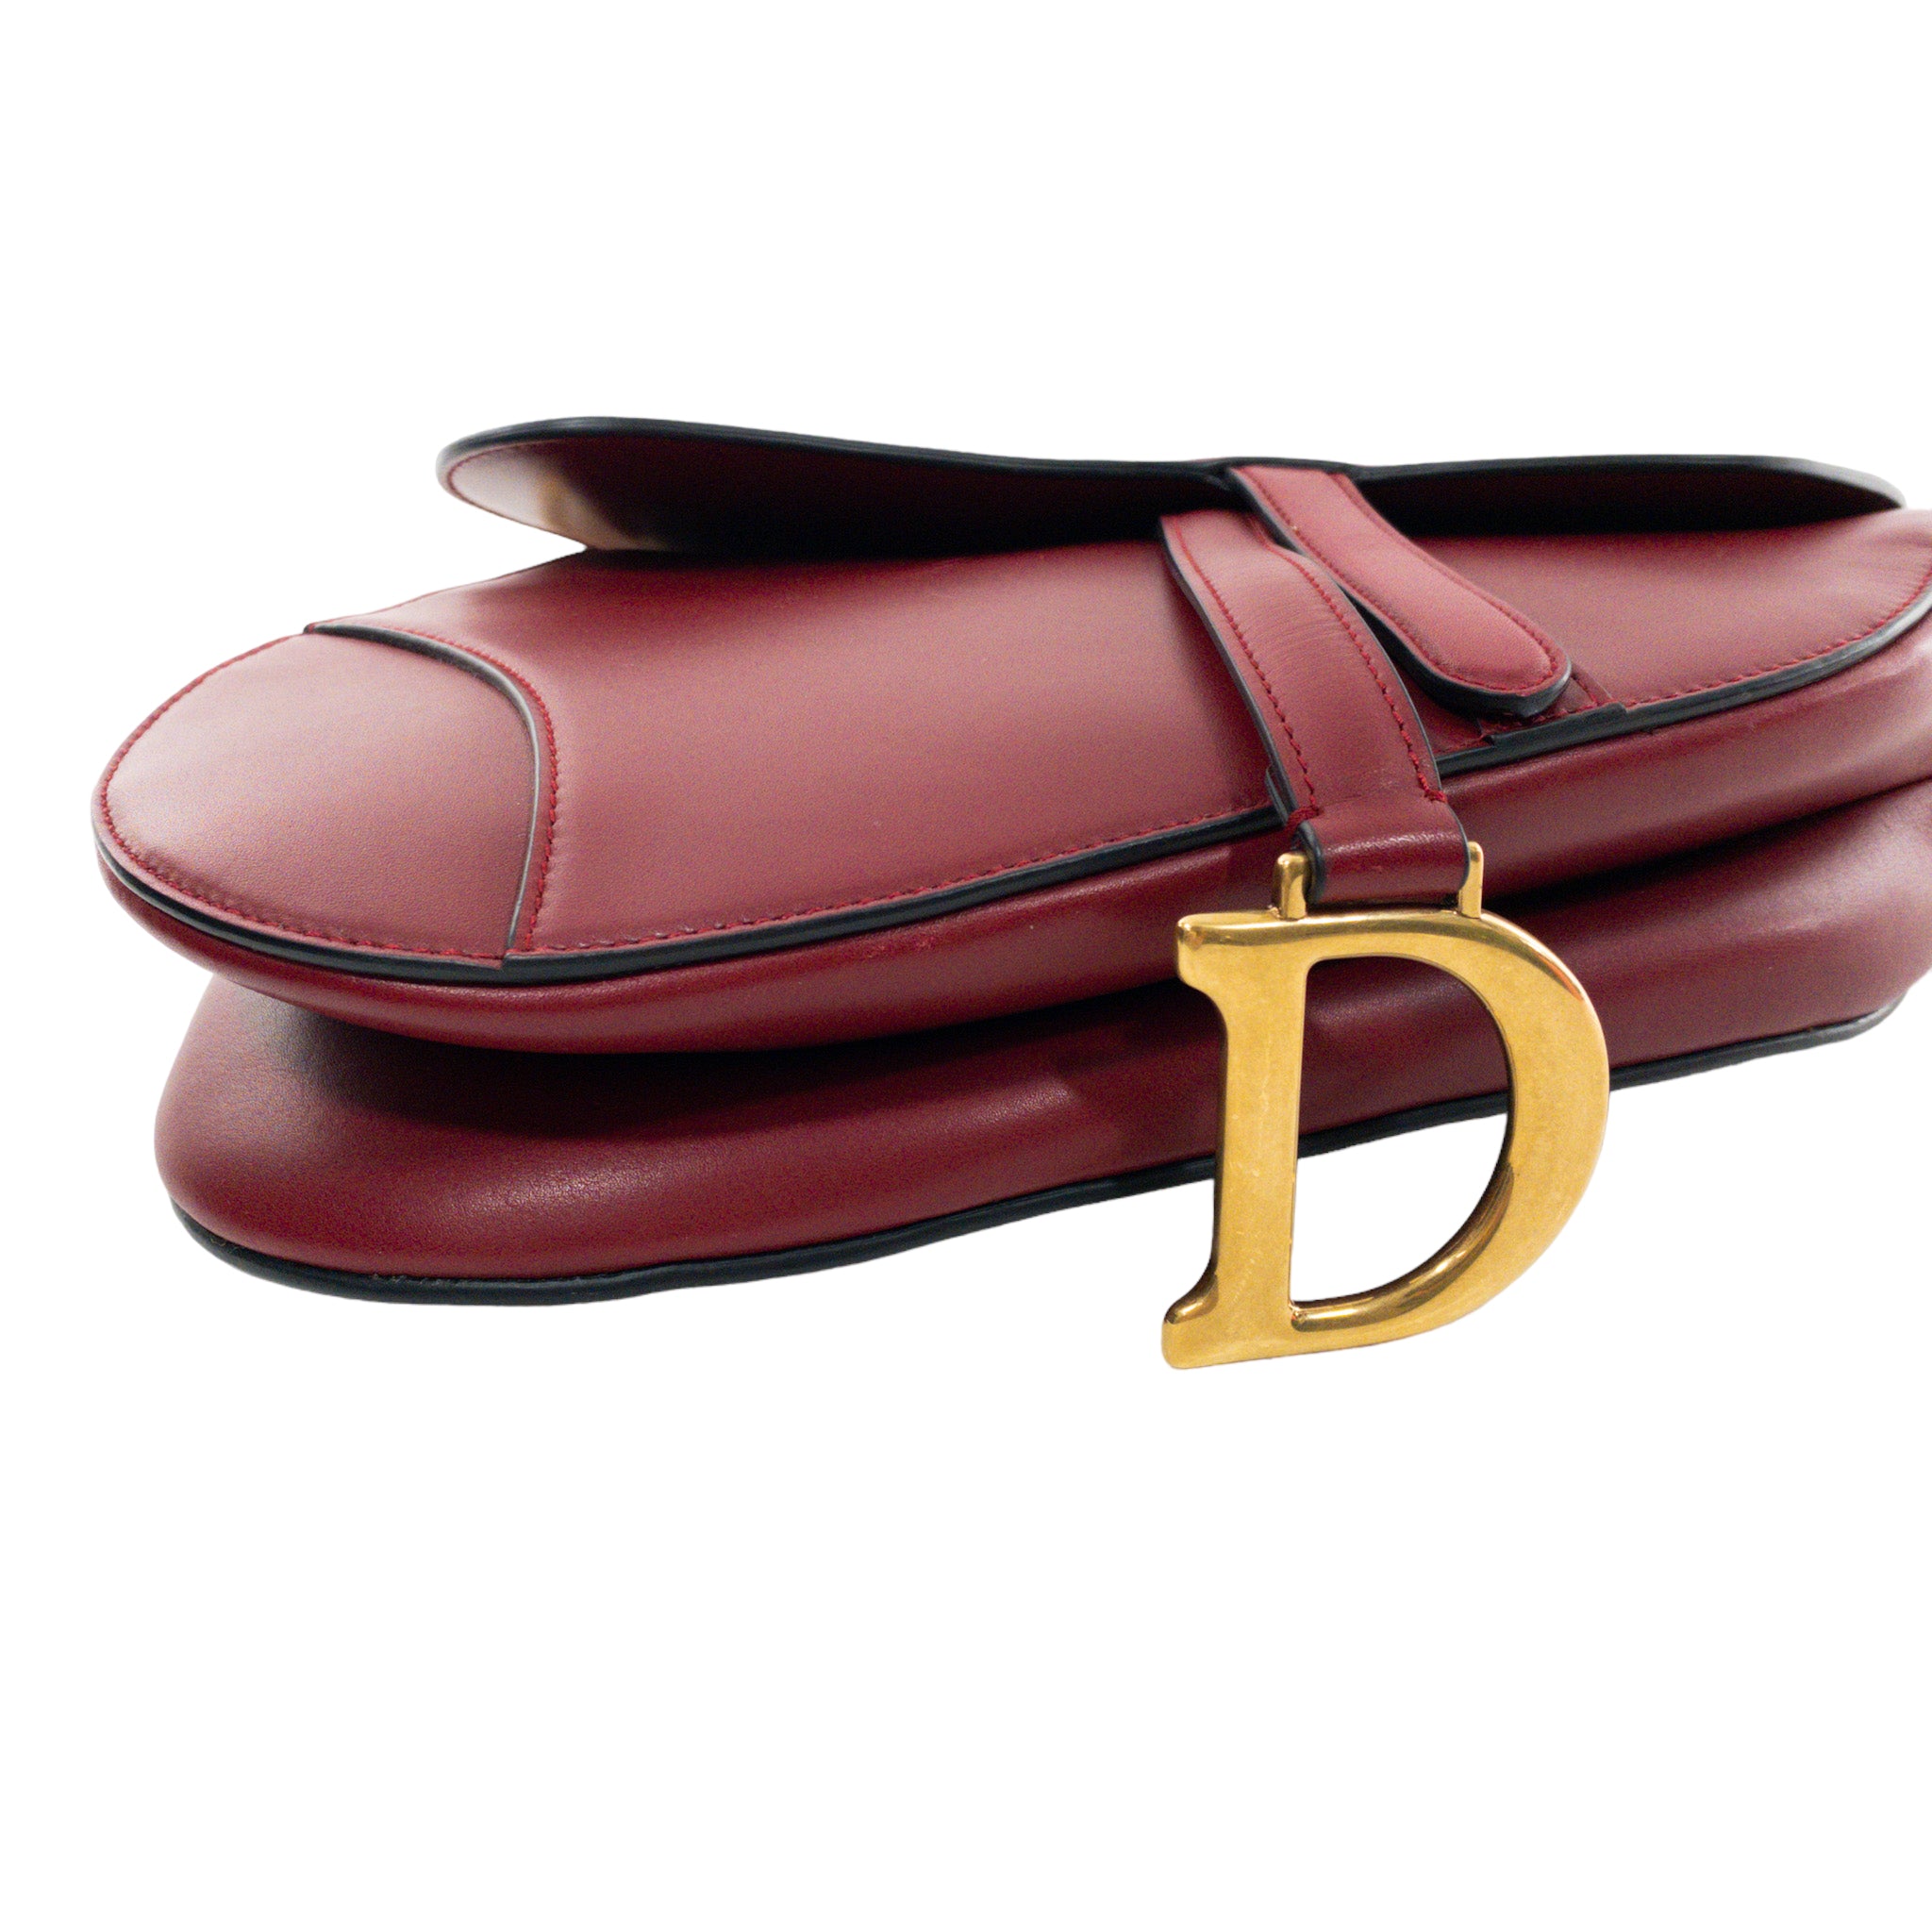 Dior Medium Leather Saddle Bag